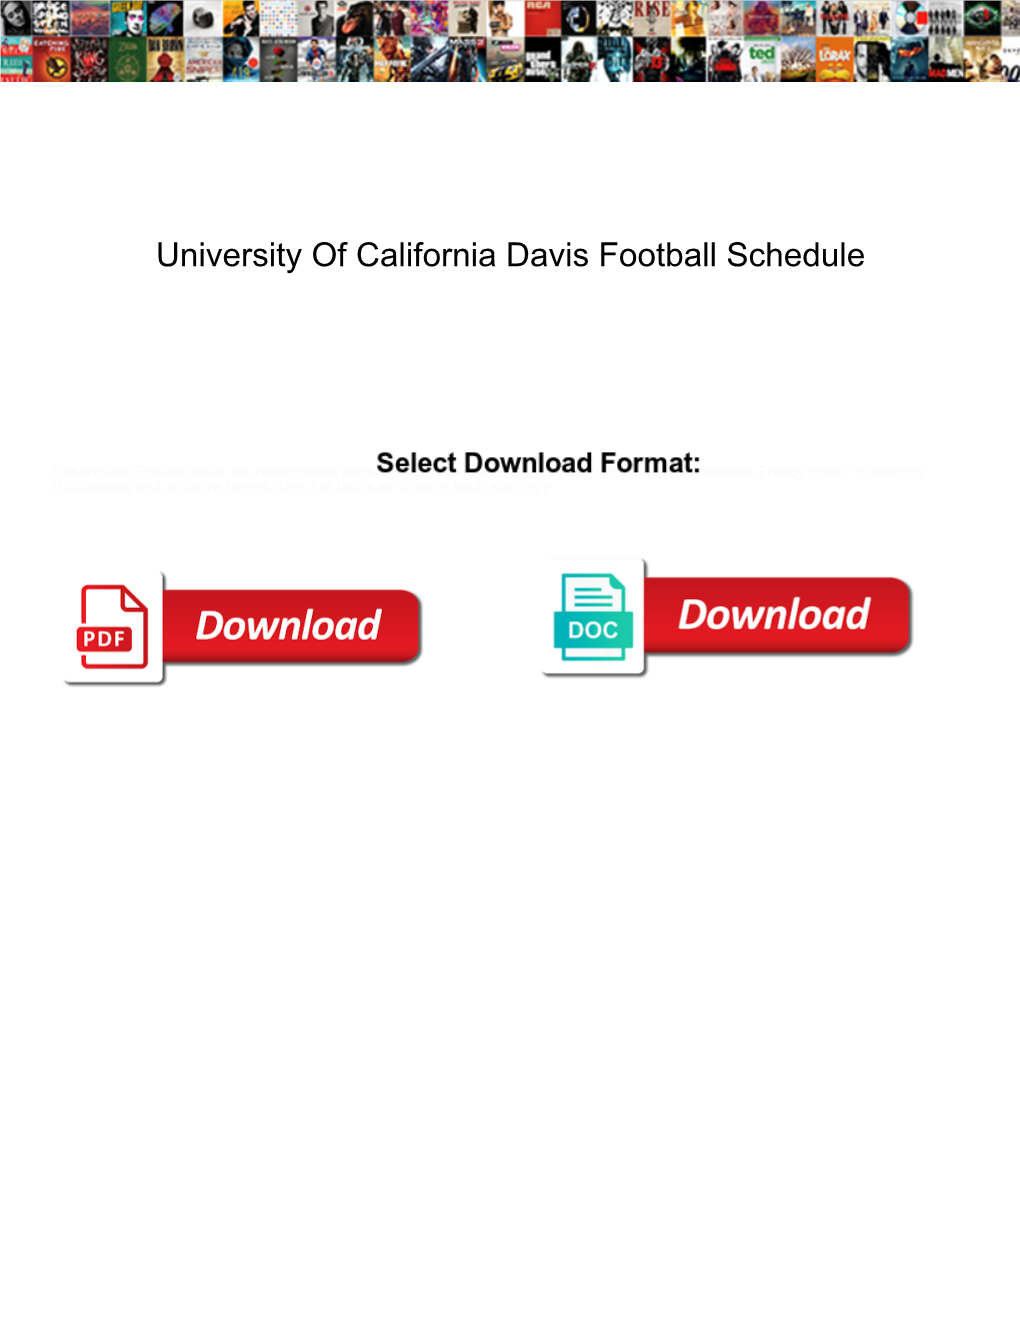 University of California Davis Football Schedule